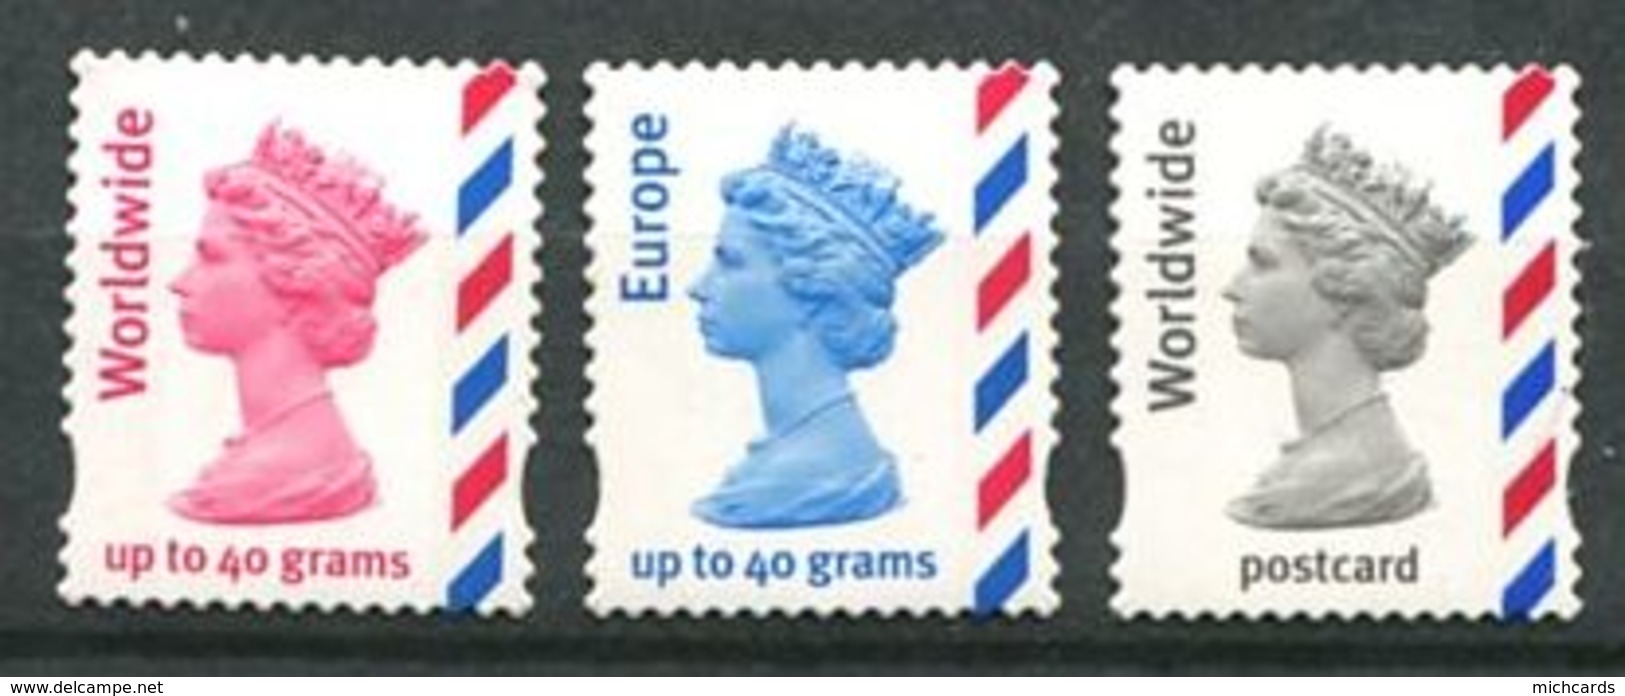 210 GRANDE BRETAGNE 2003/04 - Yvert 2425/26 Et 2545 Adhesif - Serie Courante Elizabeth II - Neuf ** (MNH) Sans Charniere - Unused Stamps